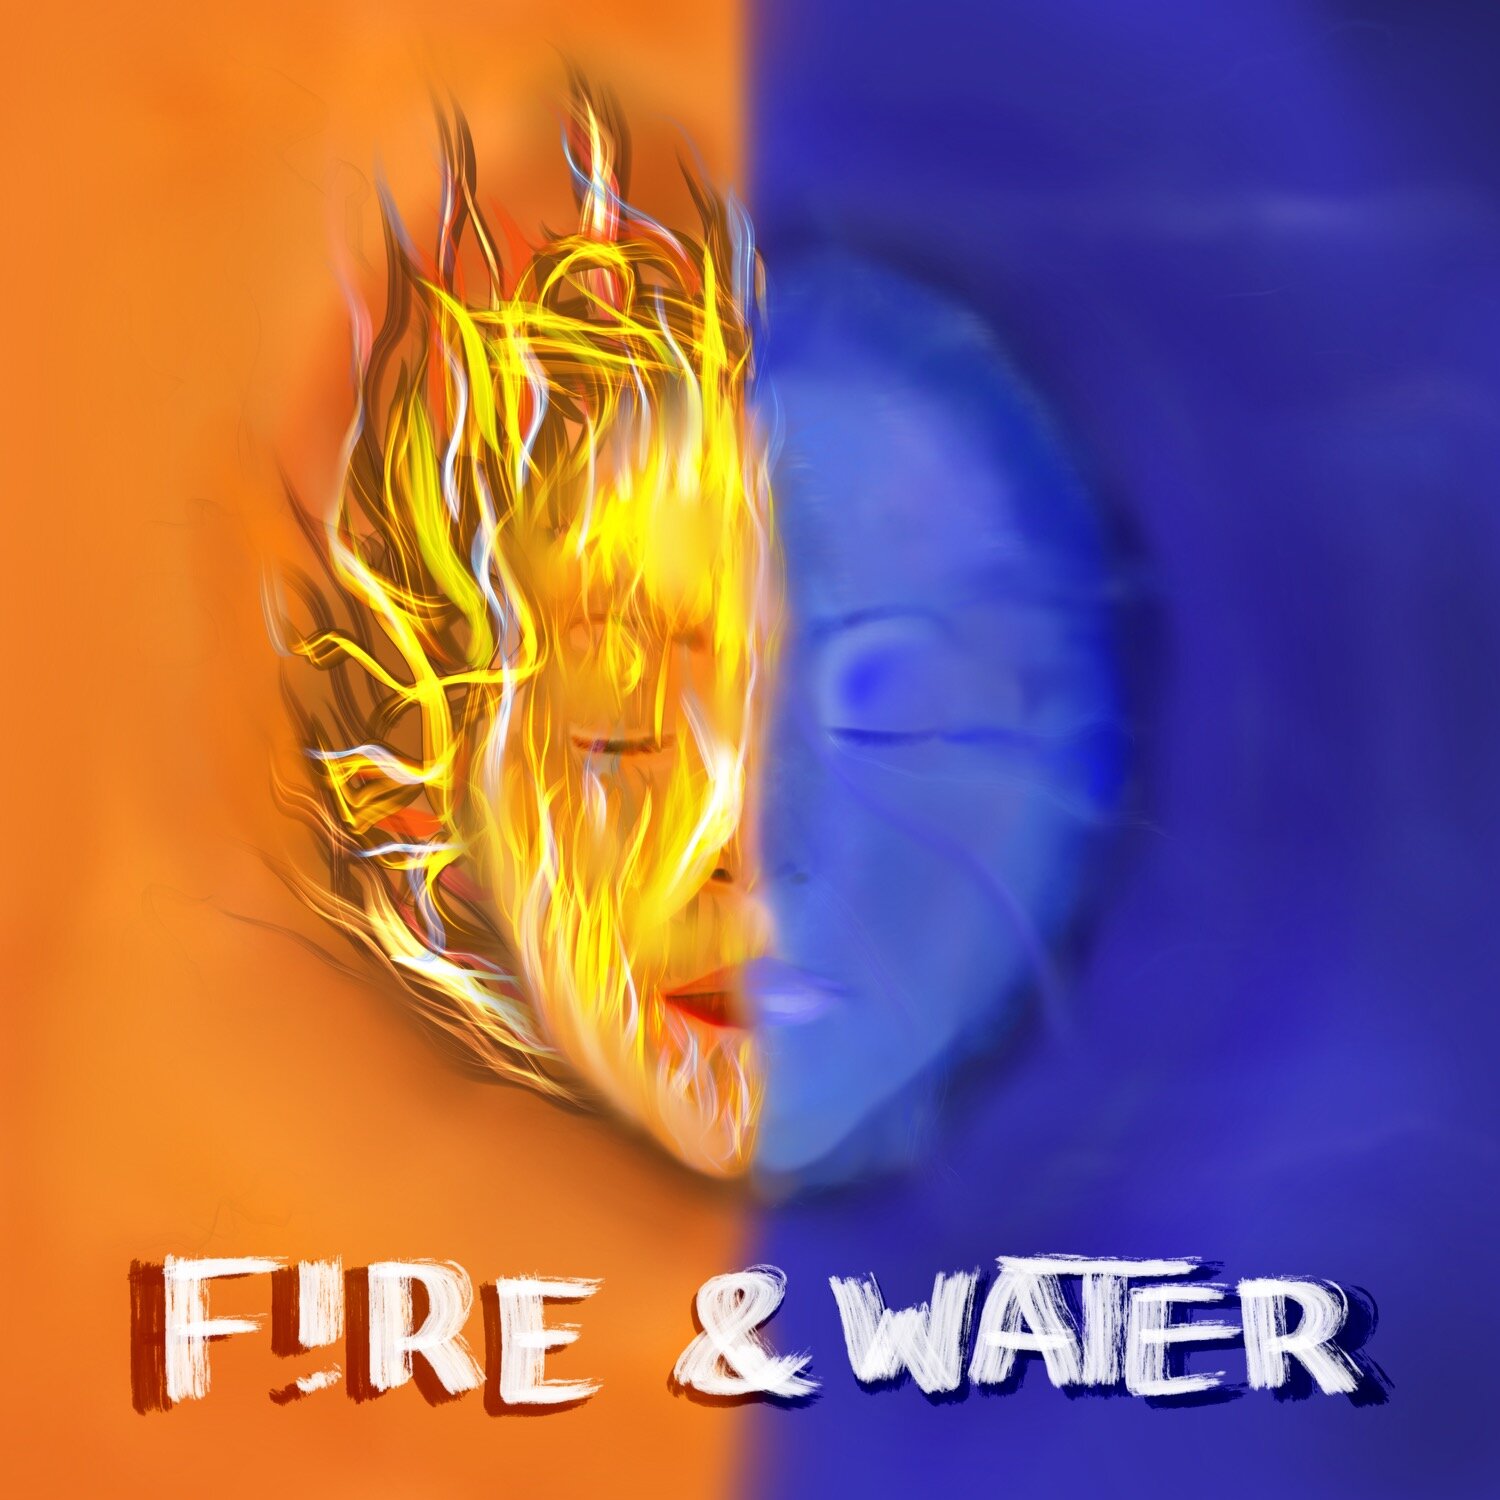 Copy of FIRE & WATER ALBUM COVER -FINAL.JPG